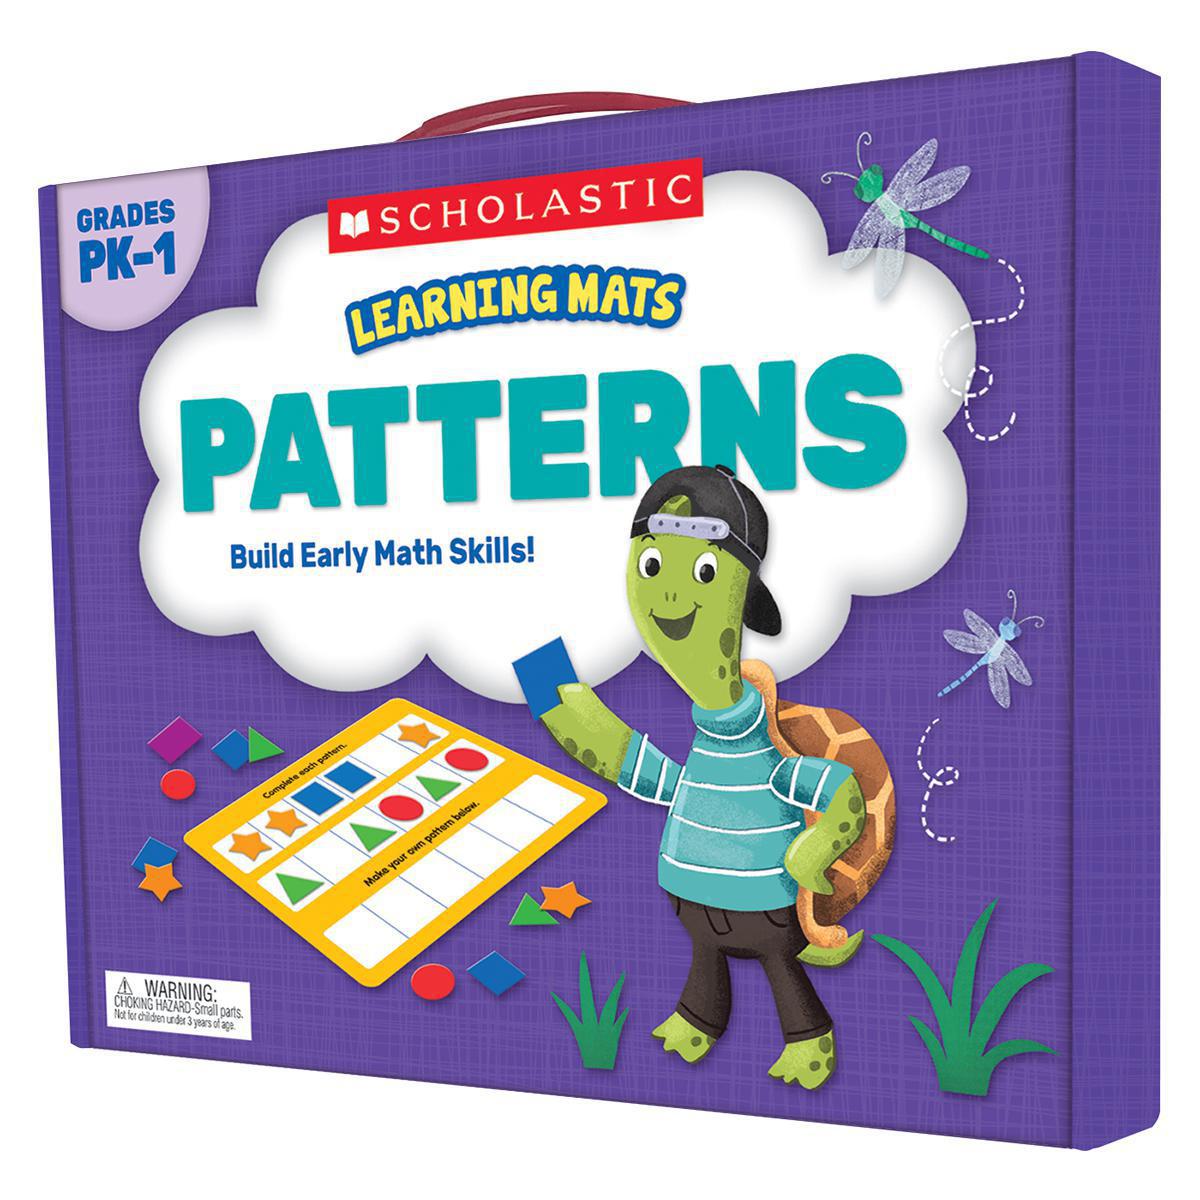  Learning Mats: Patterns 